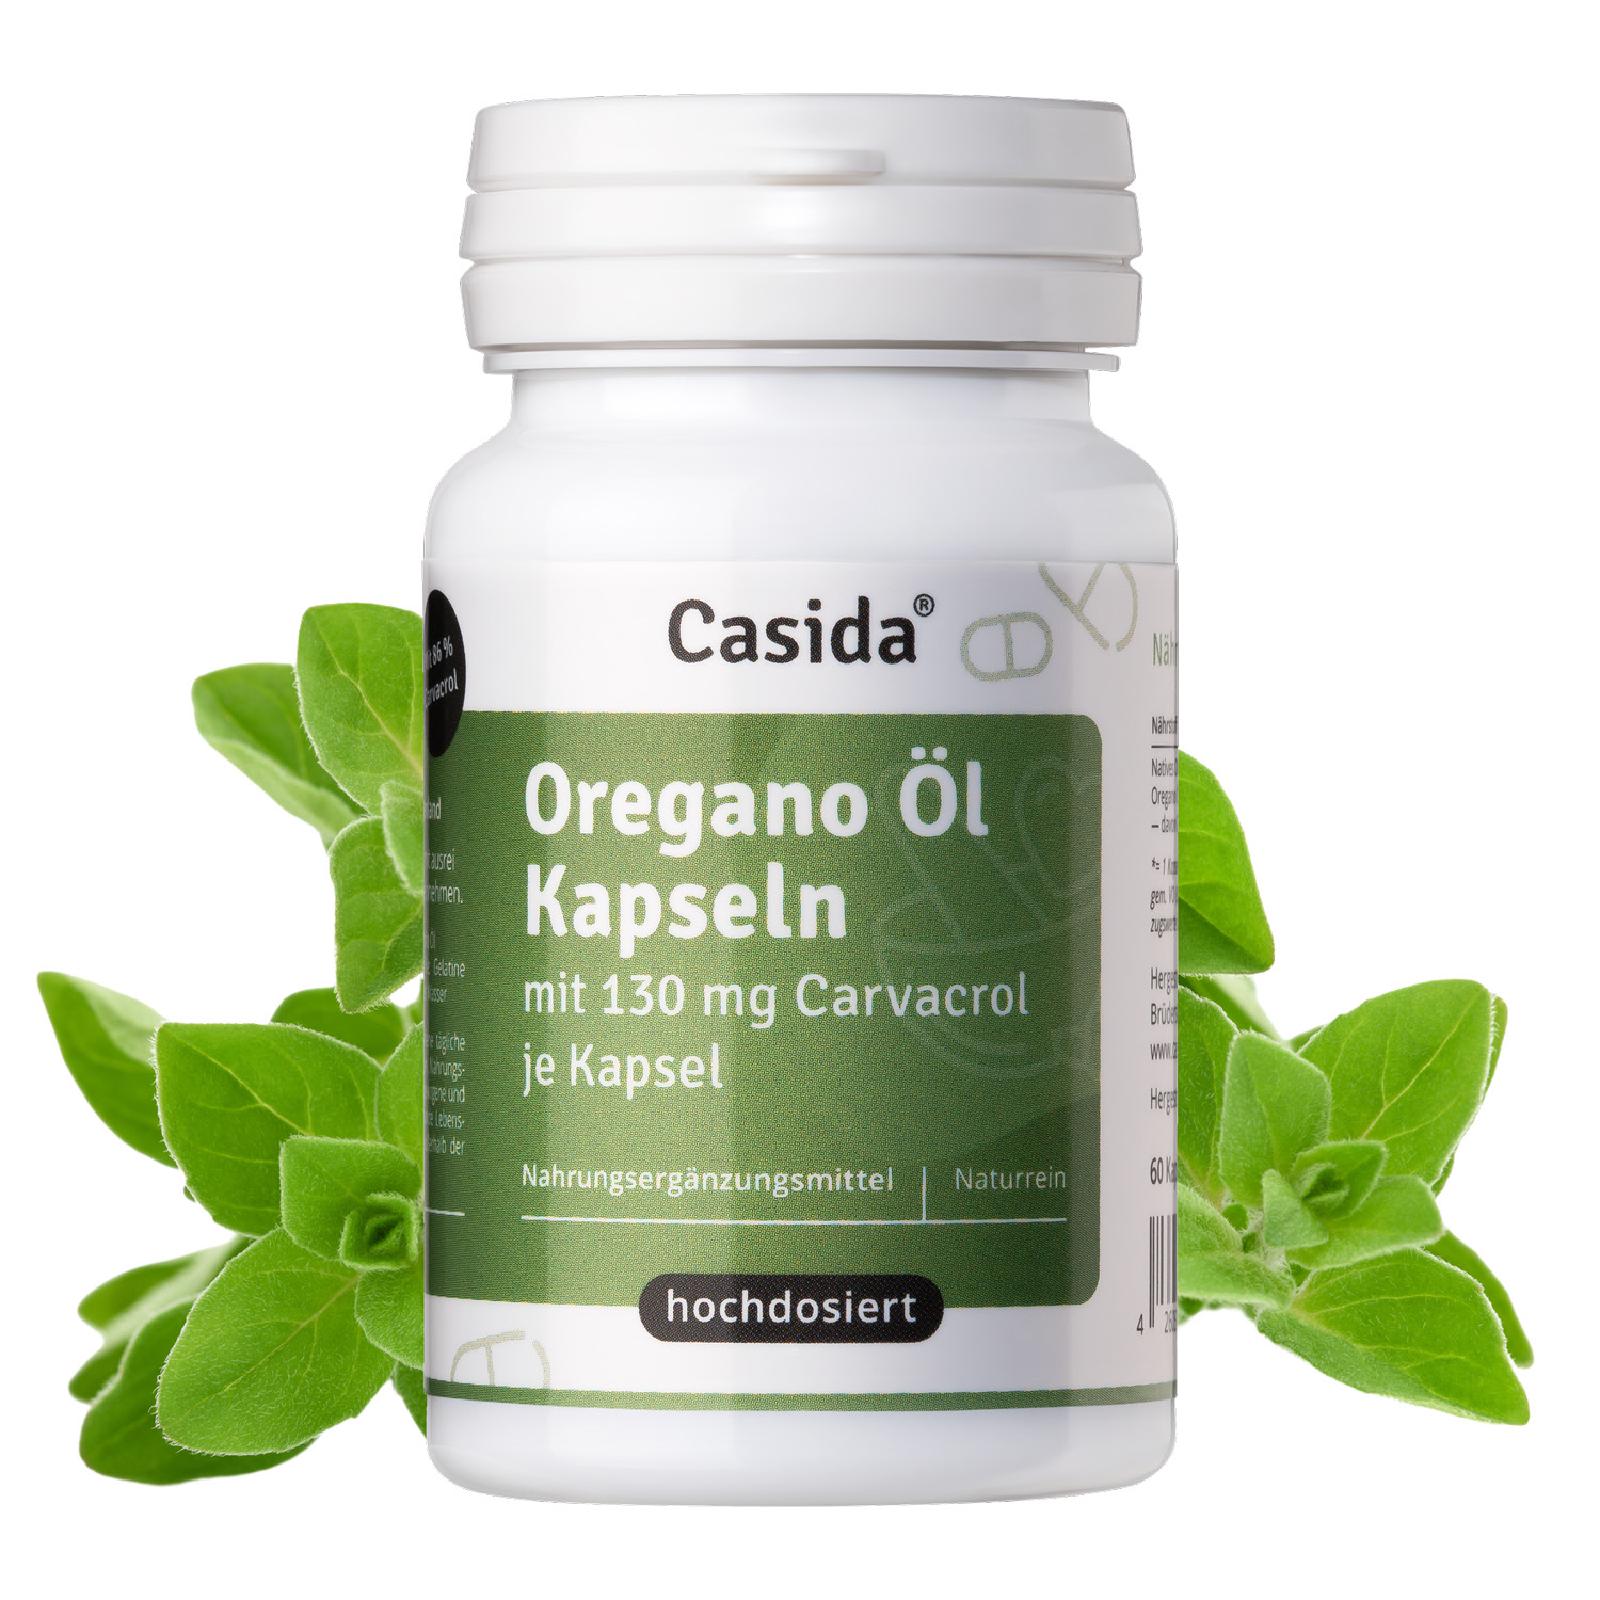 Hochdosierte Oregano Öl Kapseln aus Griechenland – 150 mg Oregano Öl je Kapsel - Hoher Carvacrol Gehalt